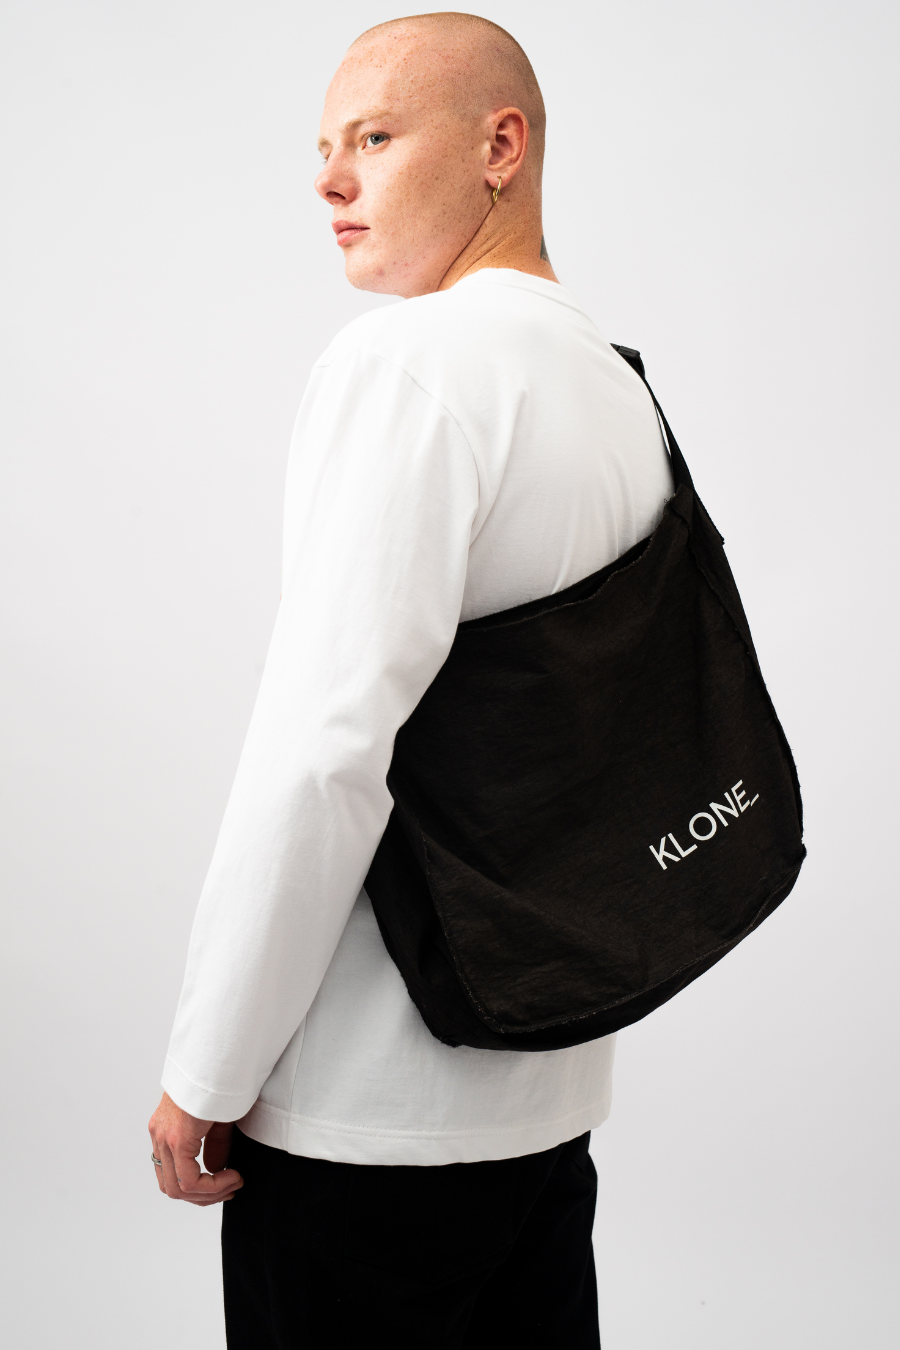 KLONE_ Messenger bag